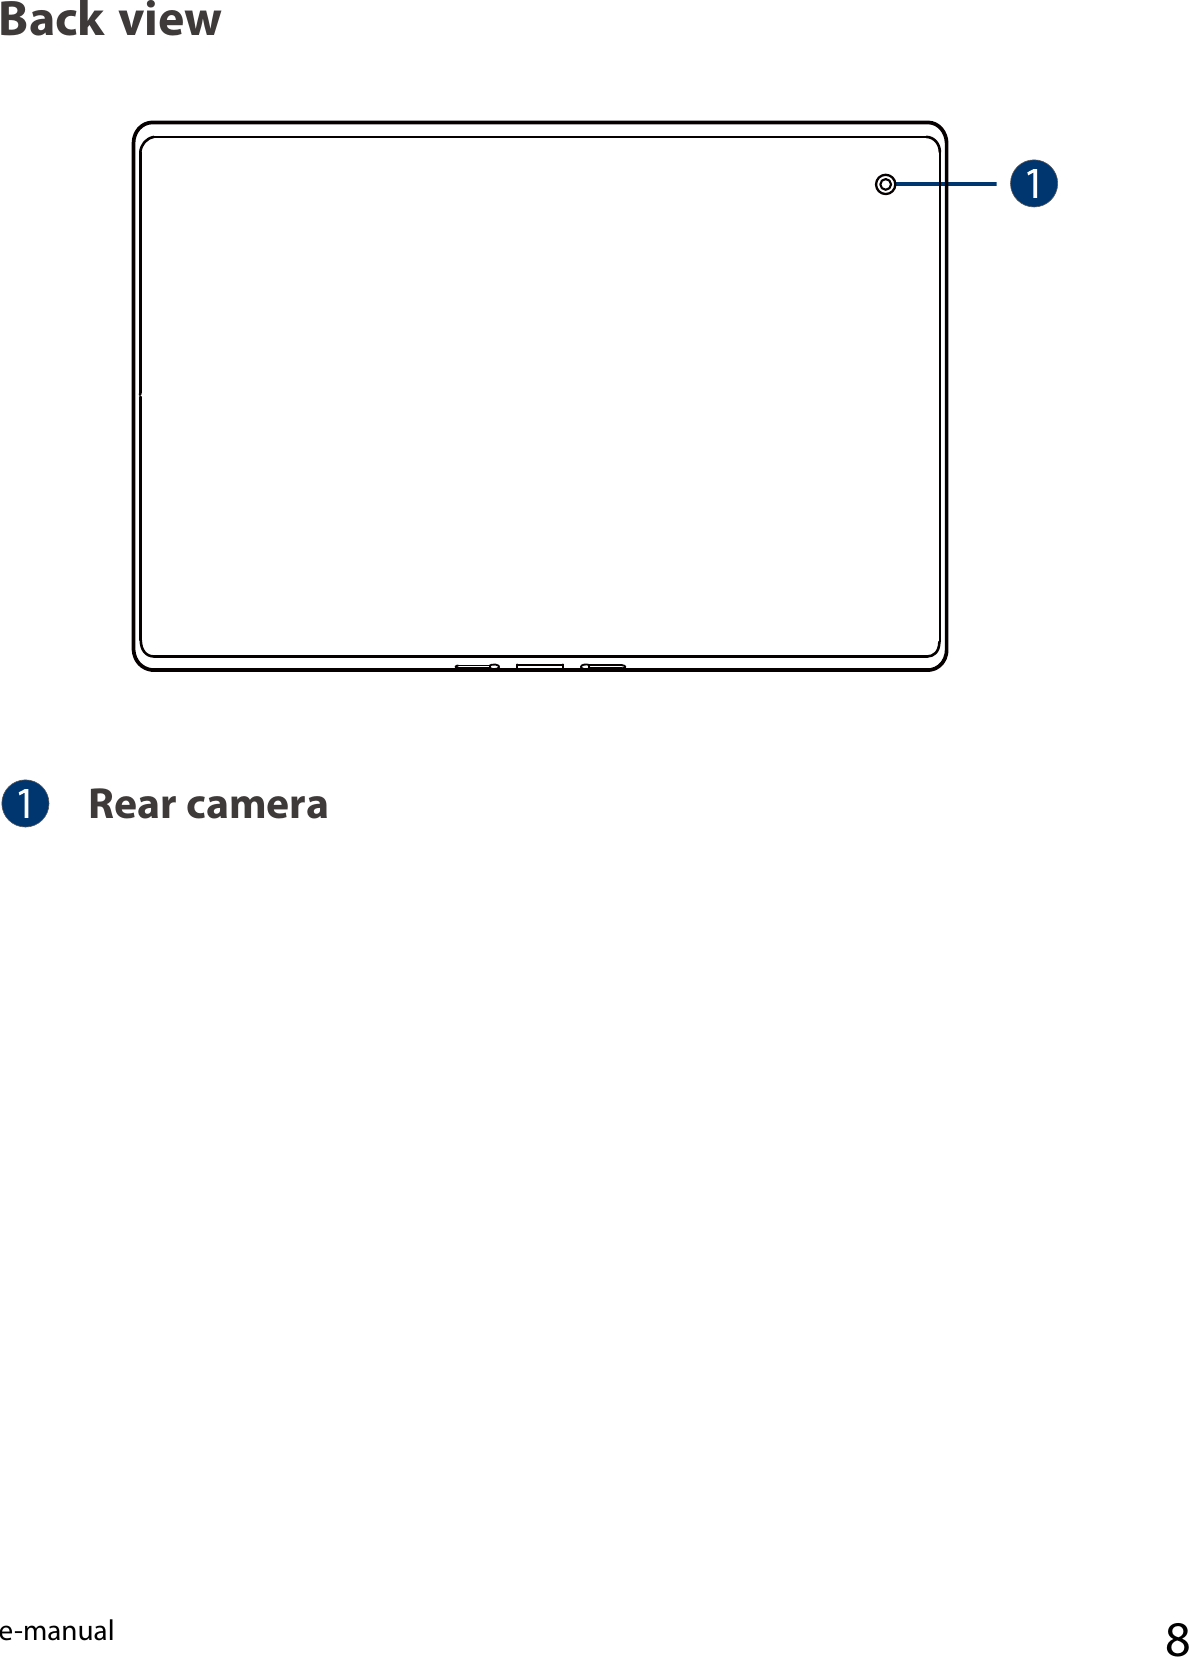 e-manual 8Back viewRear camera